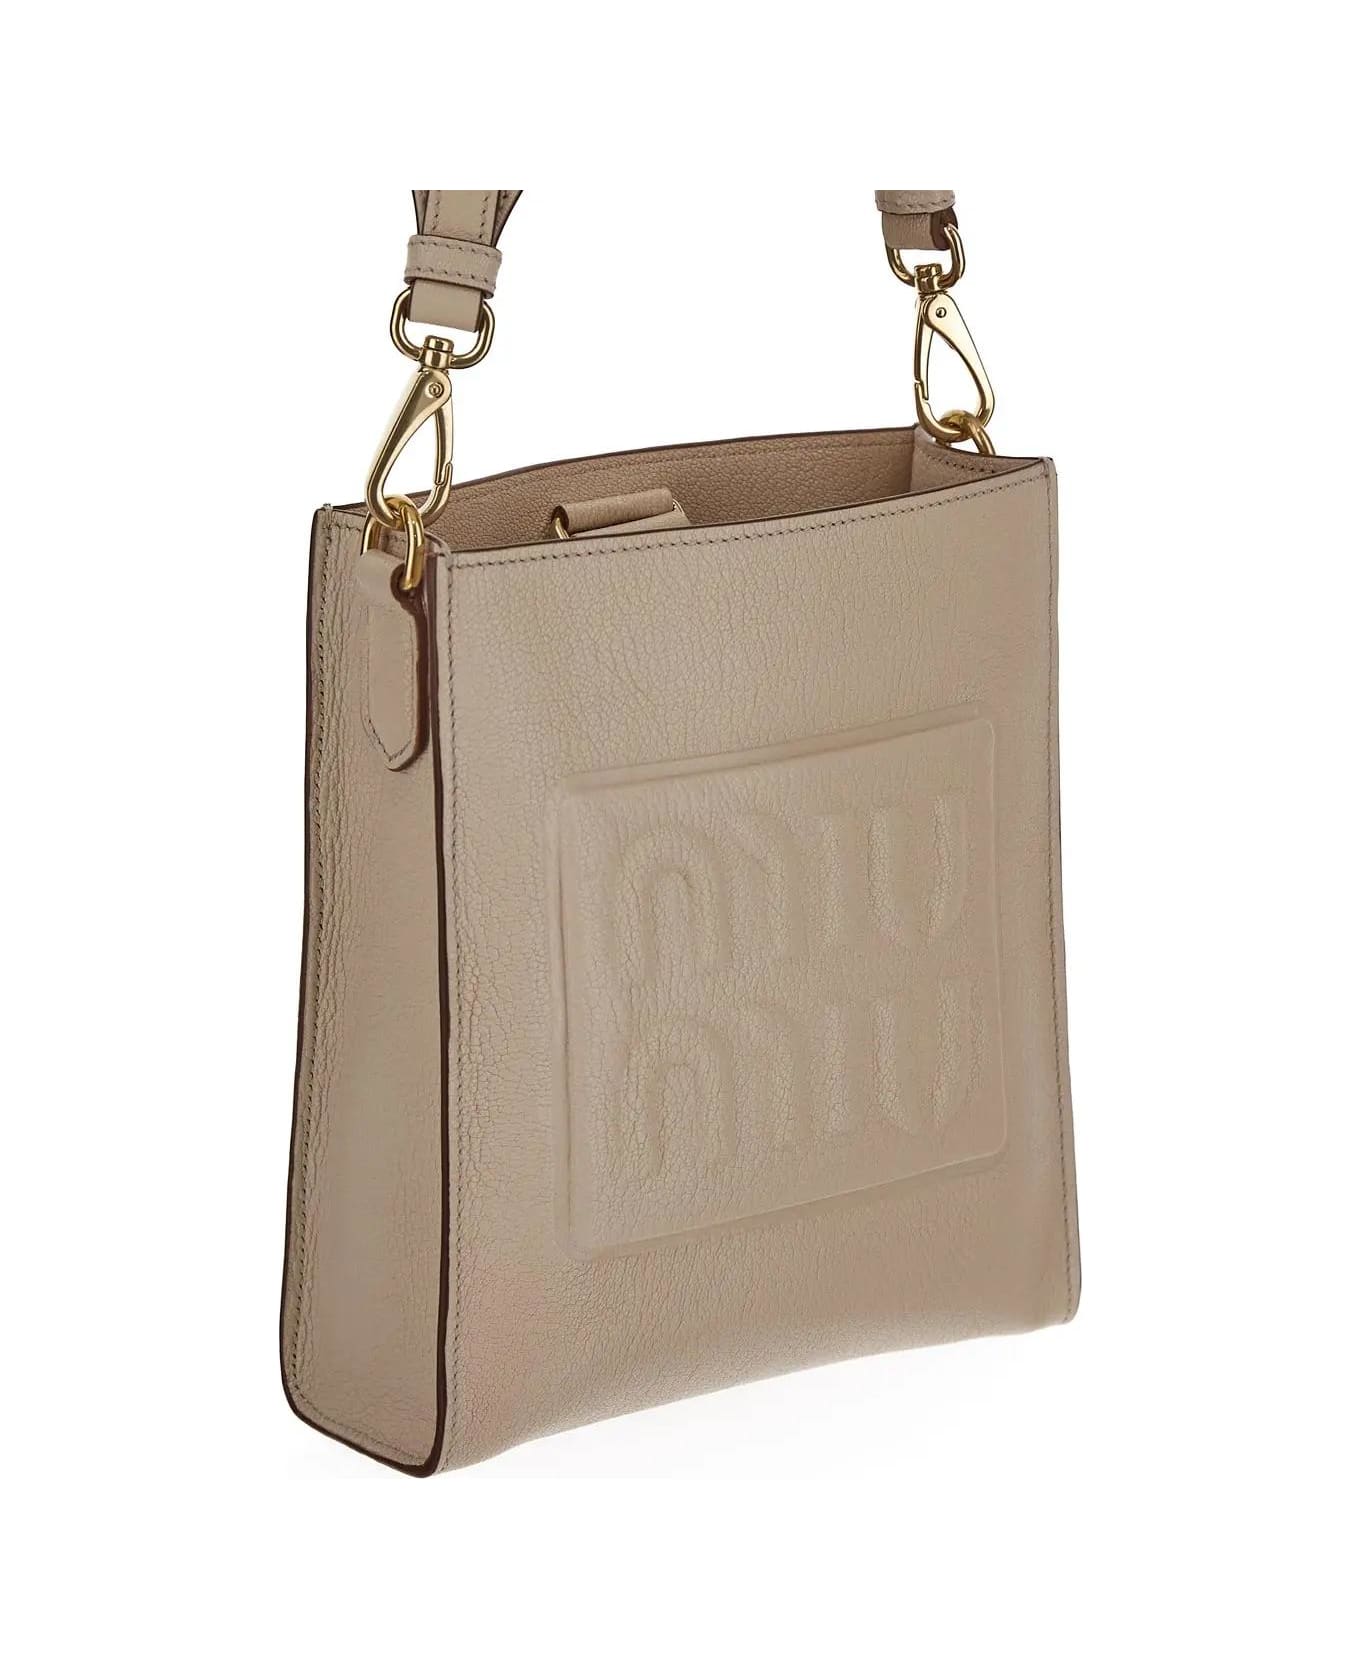 Miu Miu Leather Bag - Ivory トートバッグ